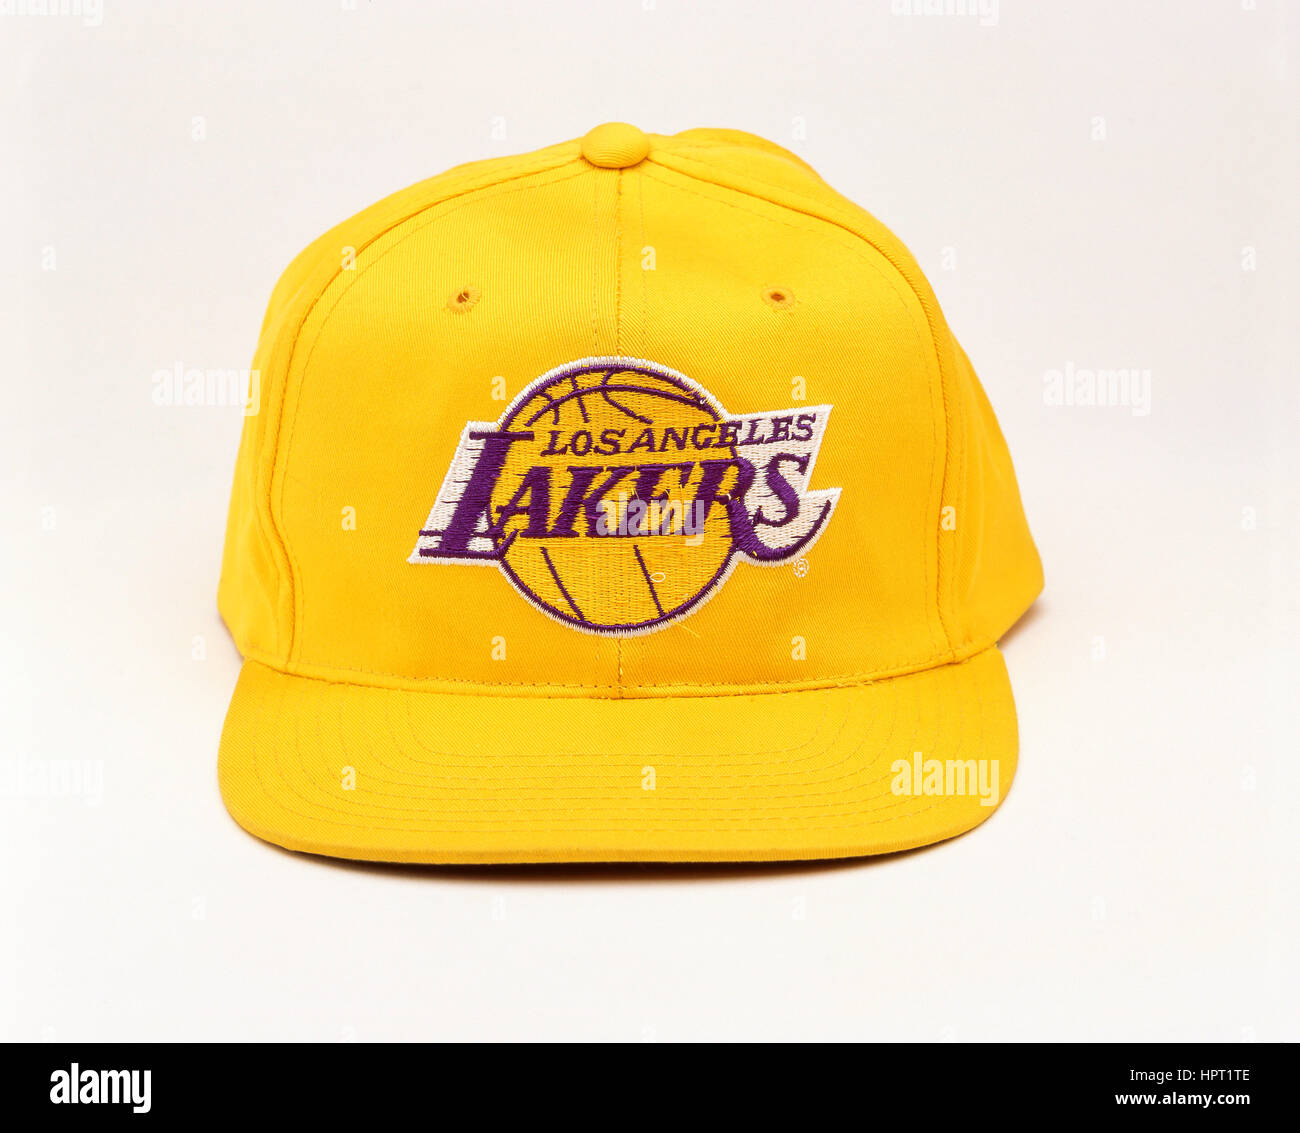 Los Angeles Lakers NBA Basketball Team cap, Los Angeles, California, Stati Uniti d'America Foto Stock